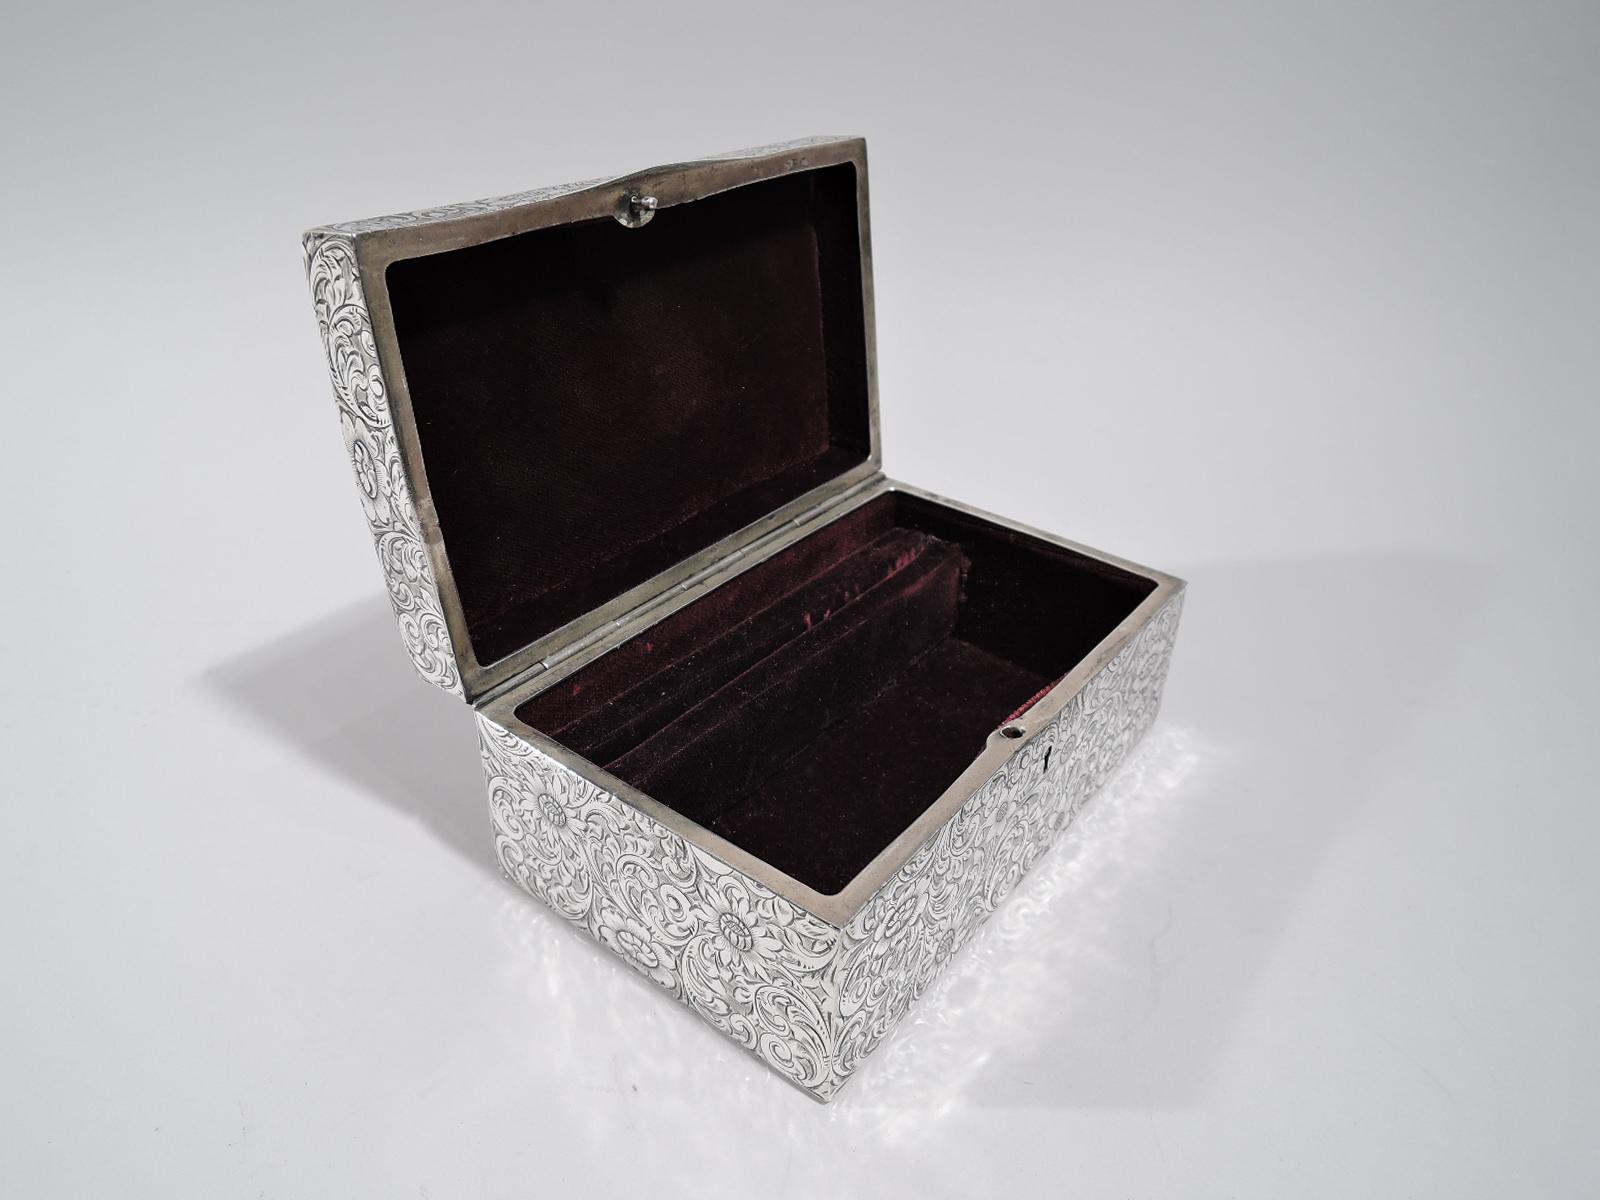 Antique American Art Nouveau Sterling Silver Jewelry Casket Box 1